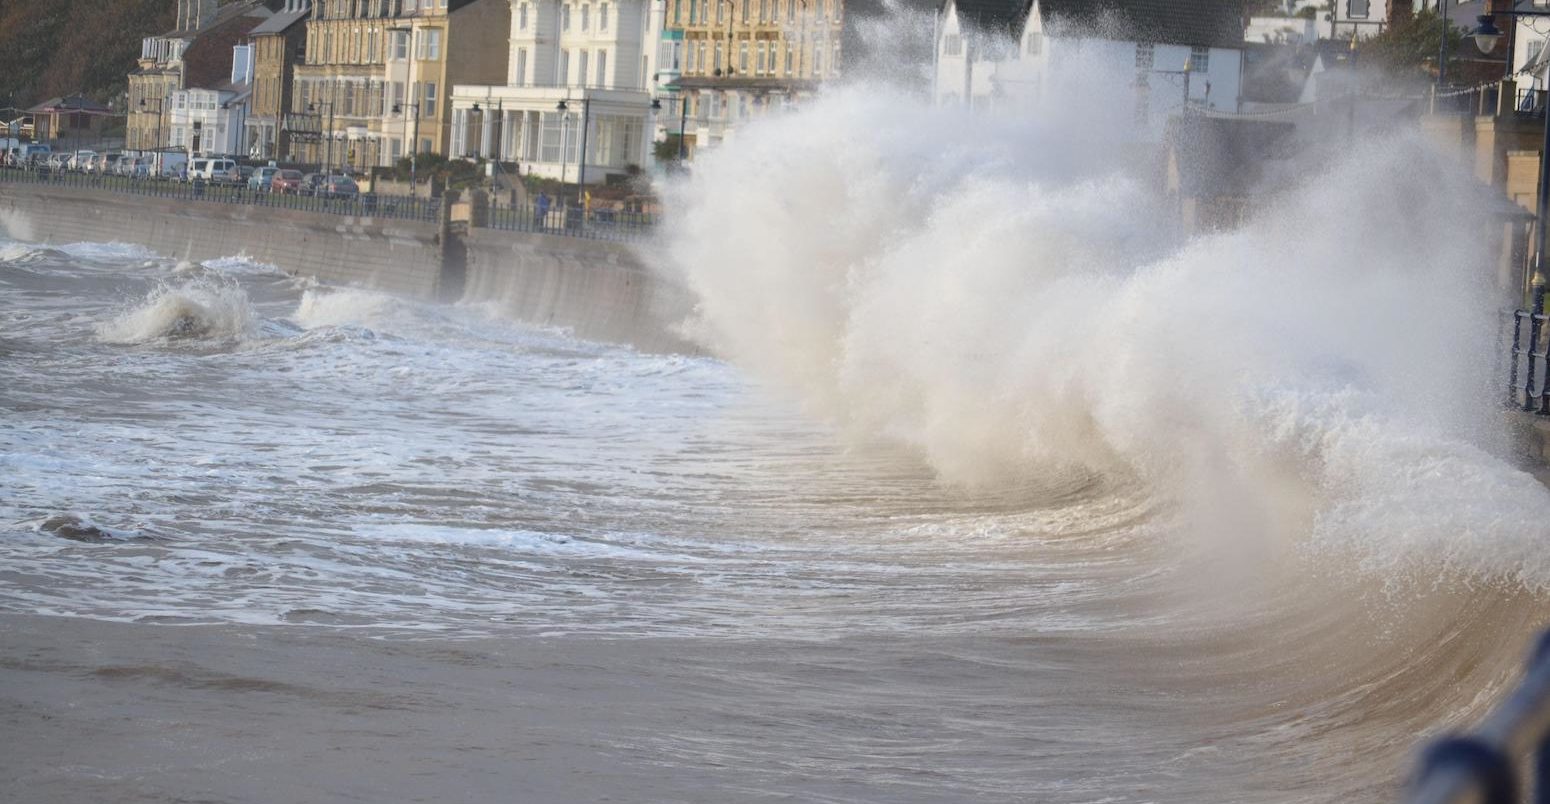 Waves crashing into sea wall, Filey Bay, Yorkshire